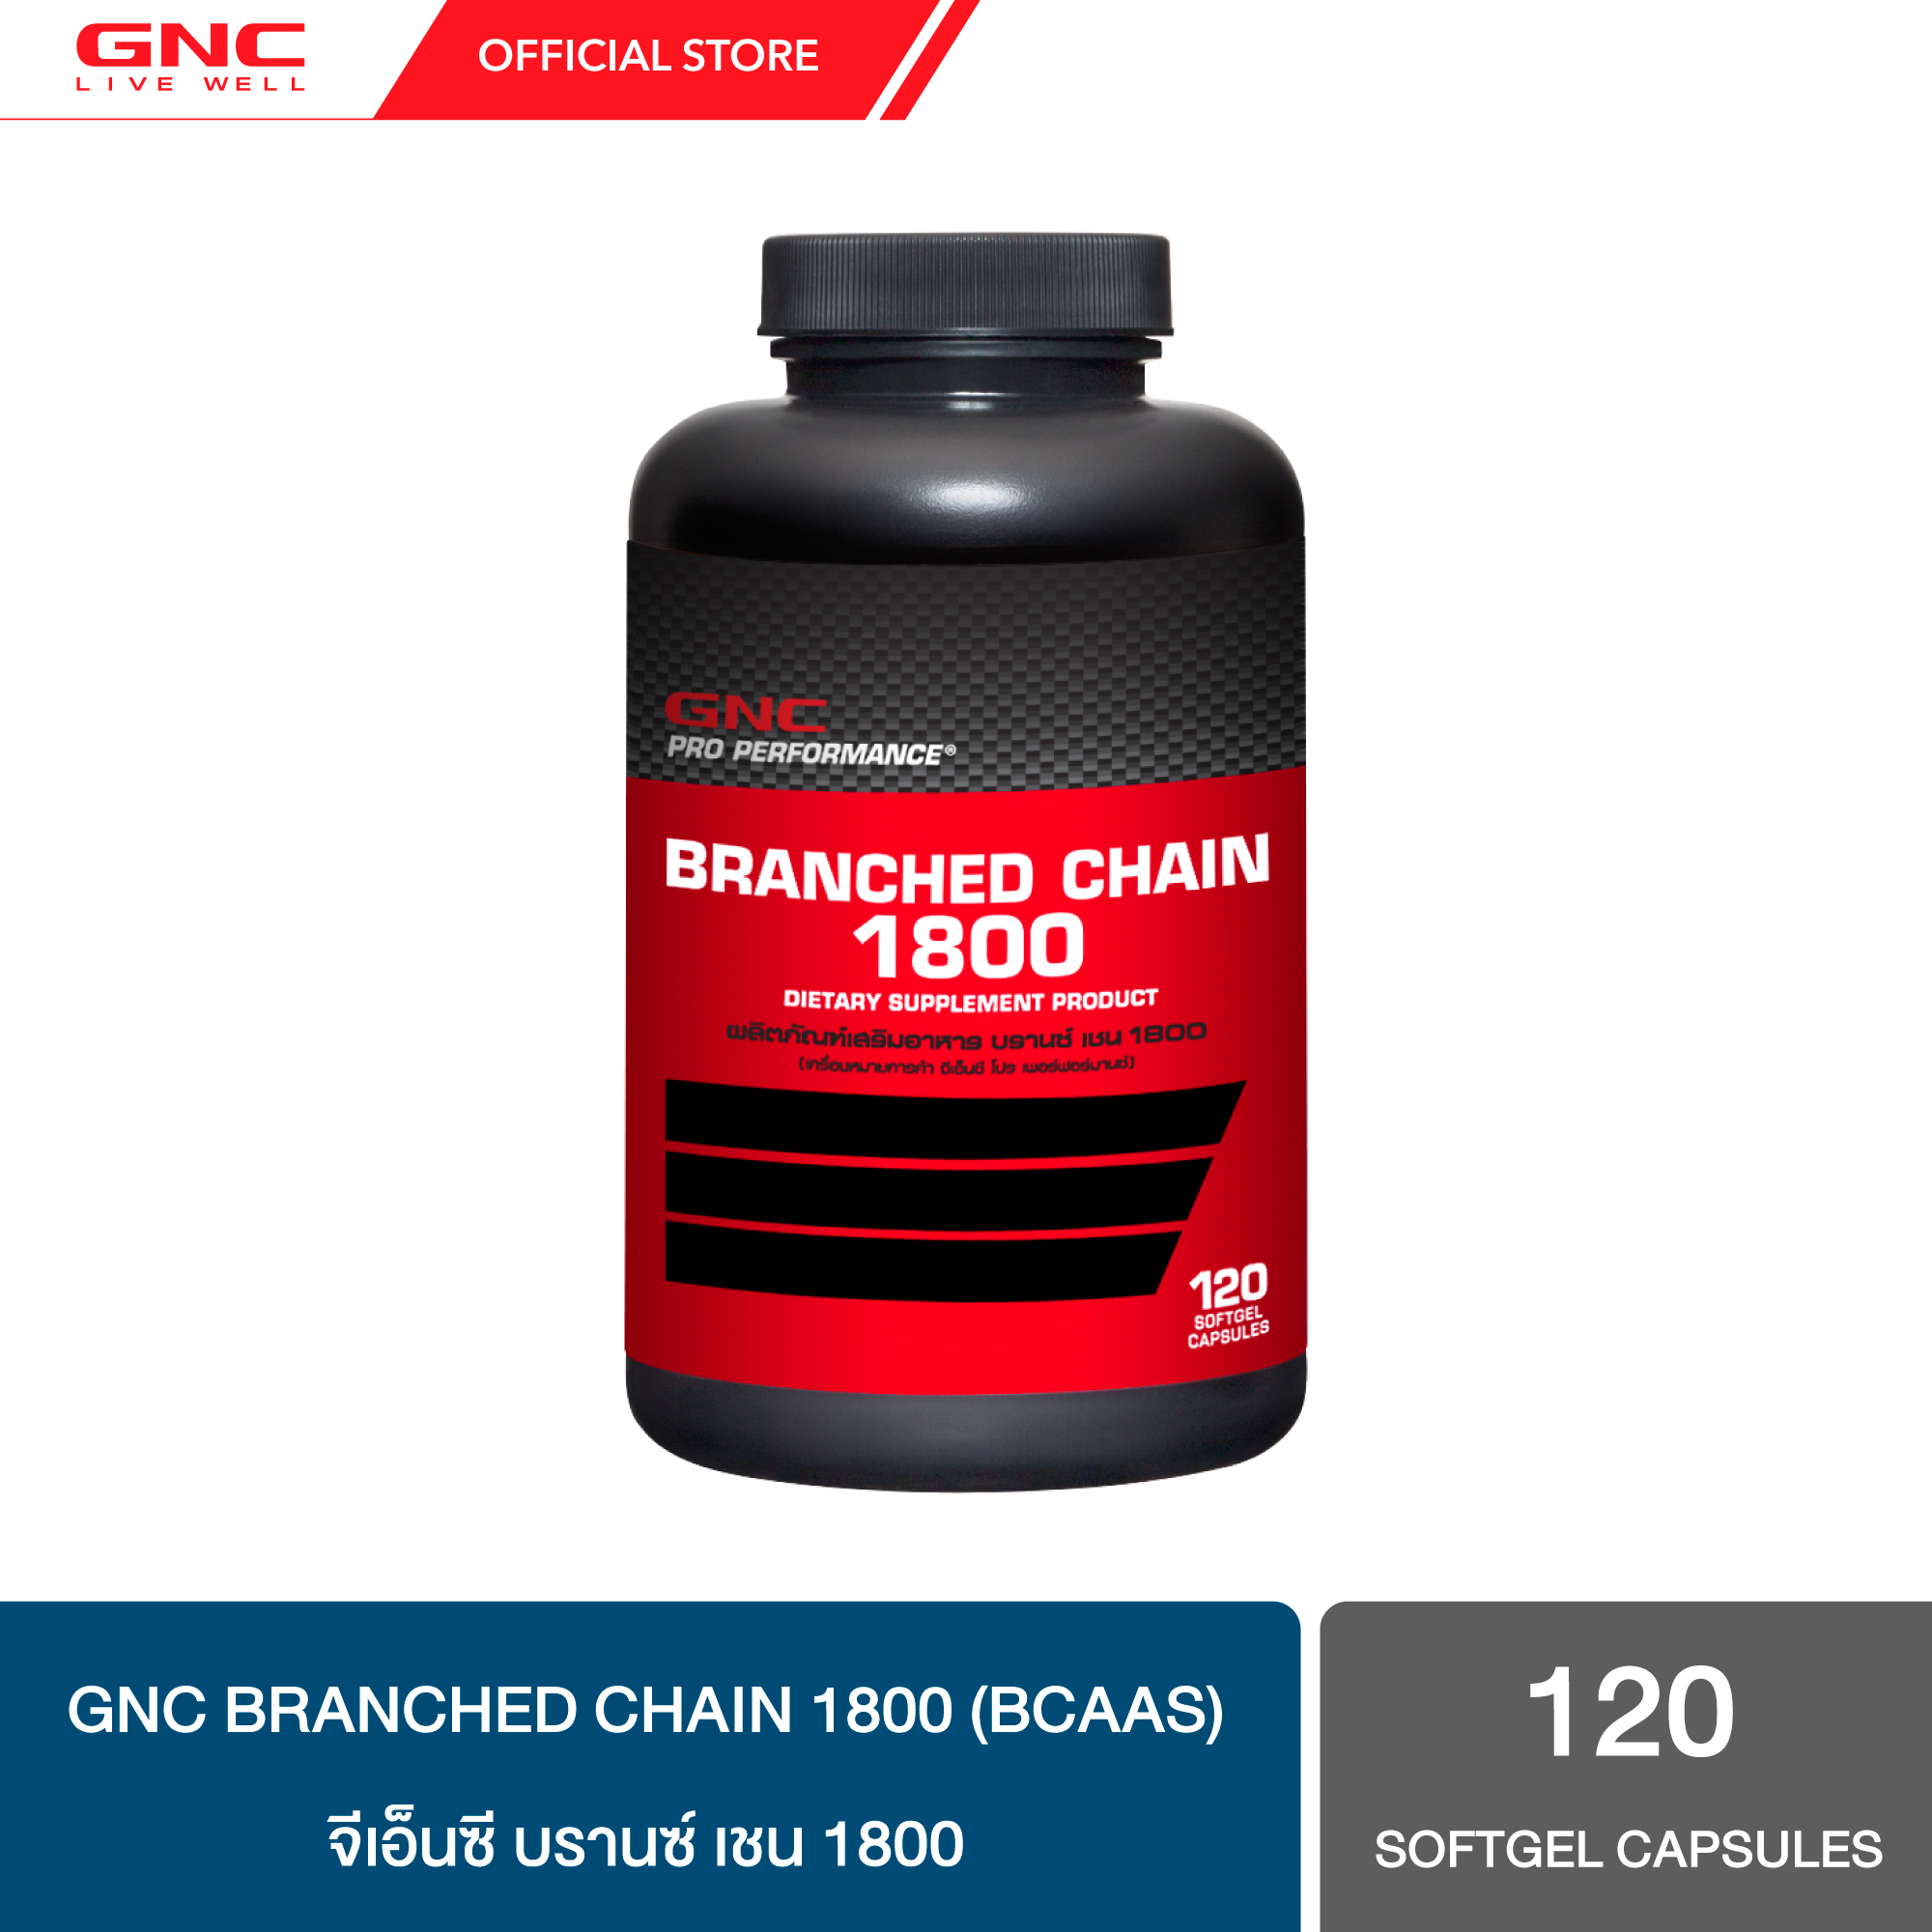 GNC Branched Chain1800 (BCAAs) 120 SG X ส่งเสริมประสิทธิภาพในการออกกำลังกาย